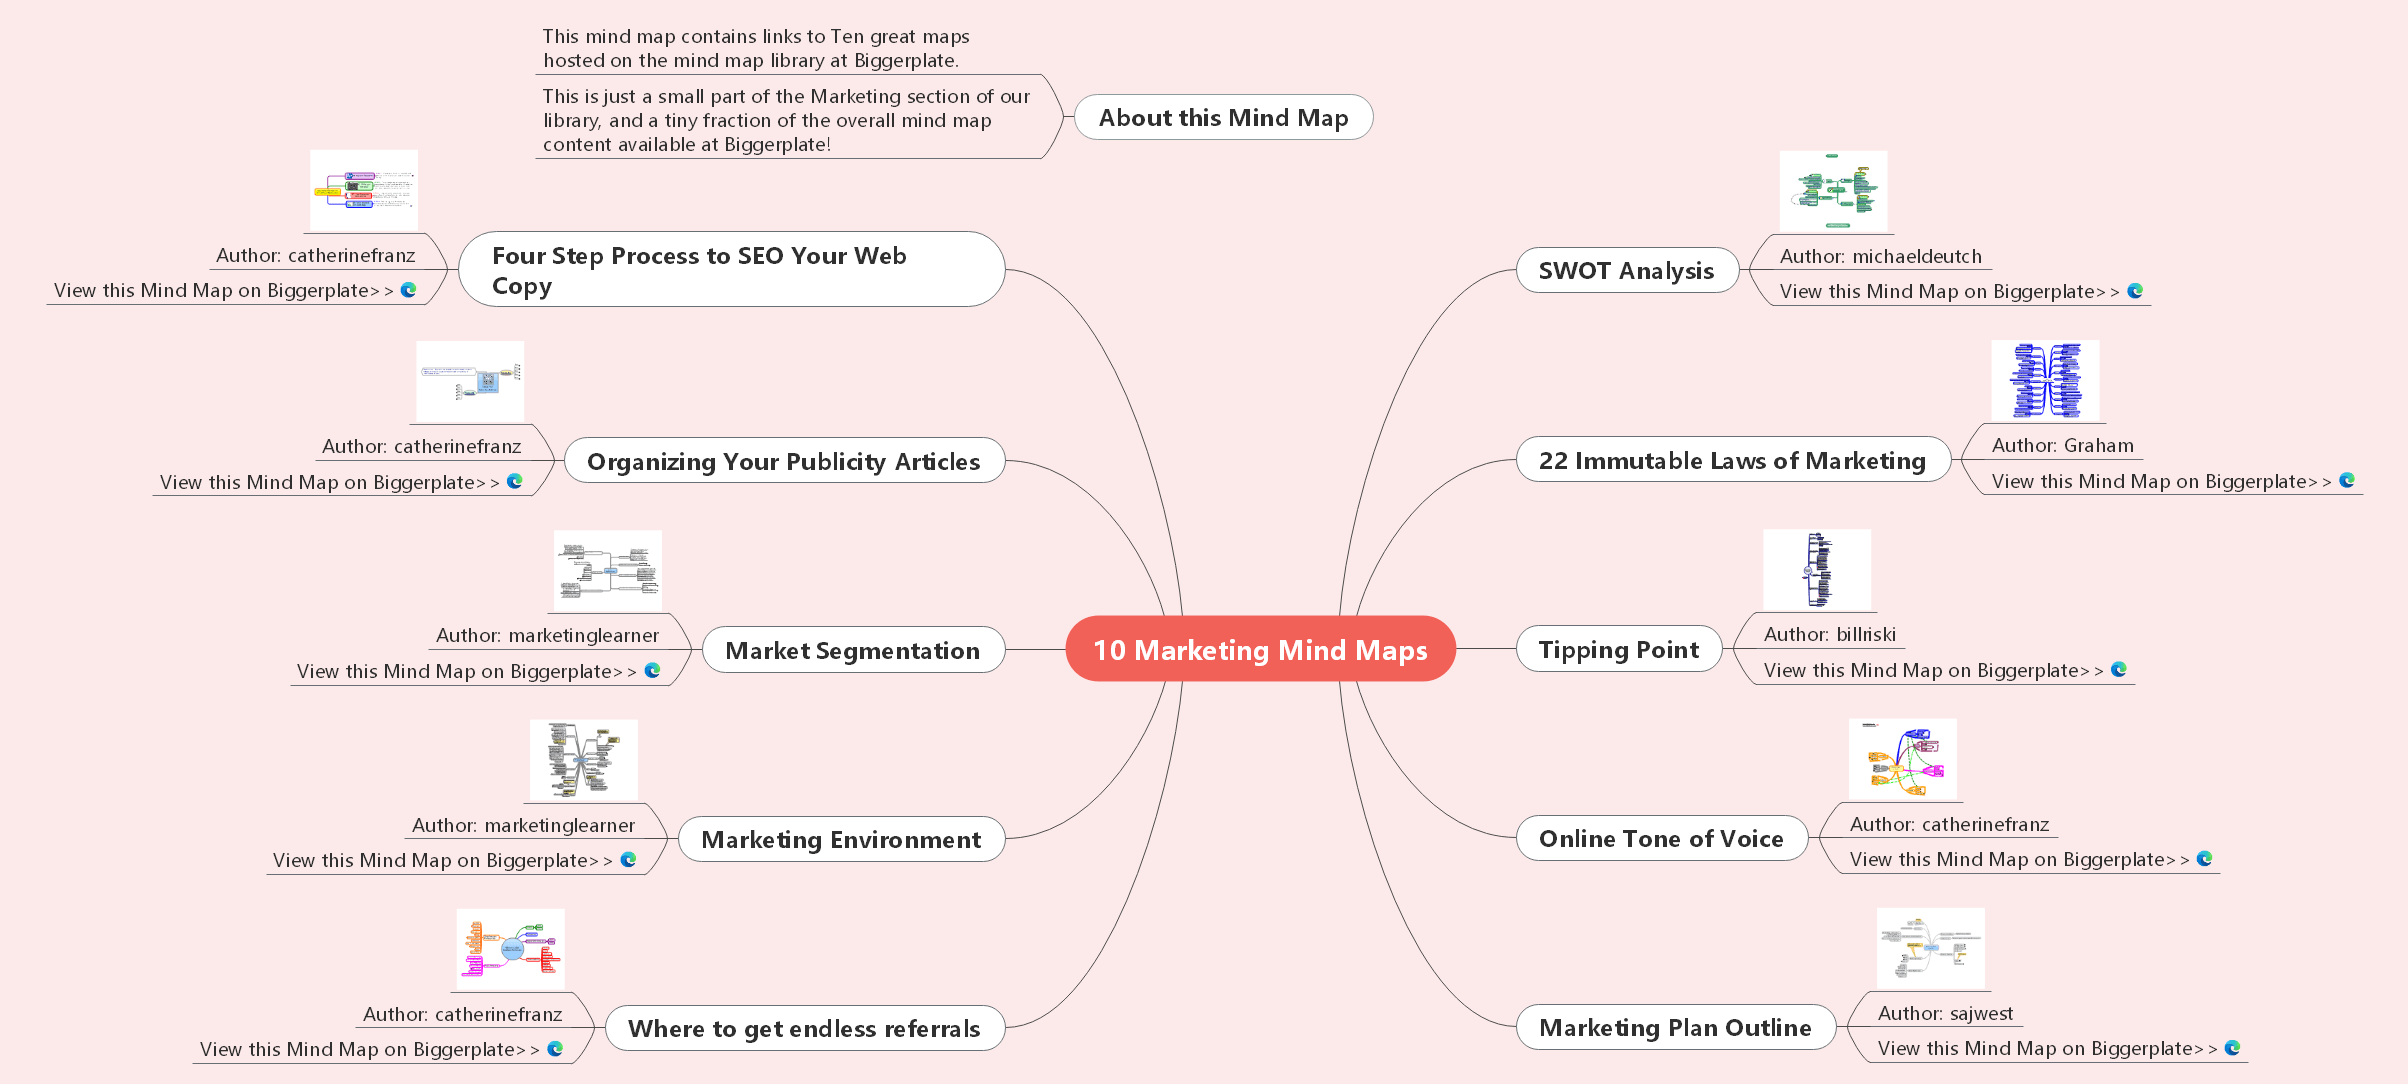 markeiting idea Map Templates